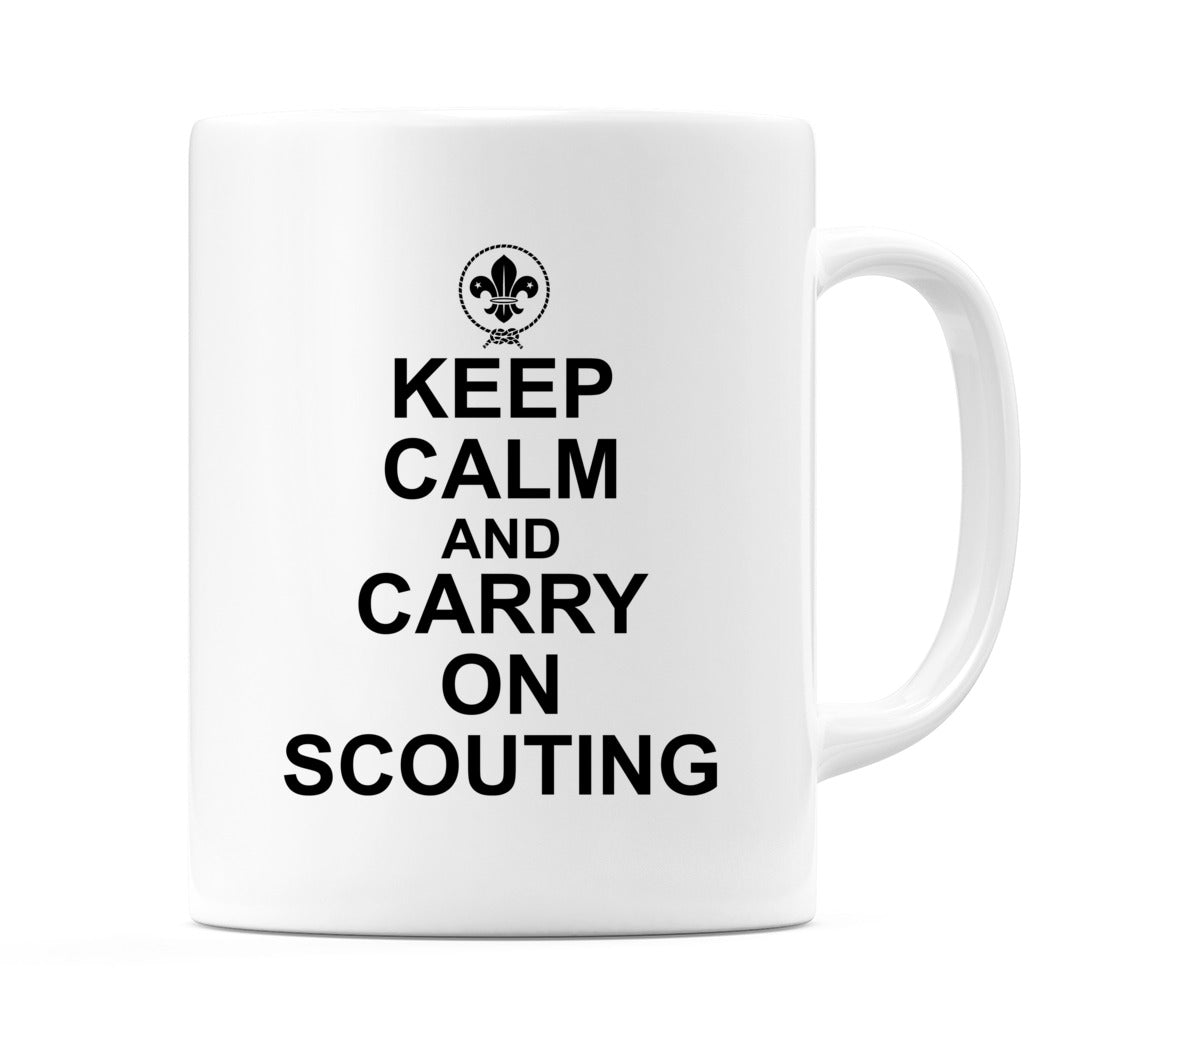 Keep Calm and Carry on Scouting Mug